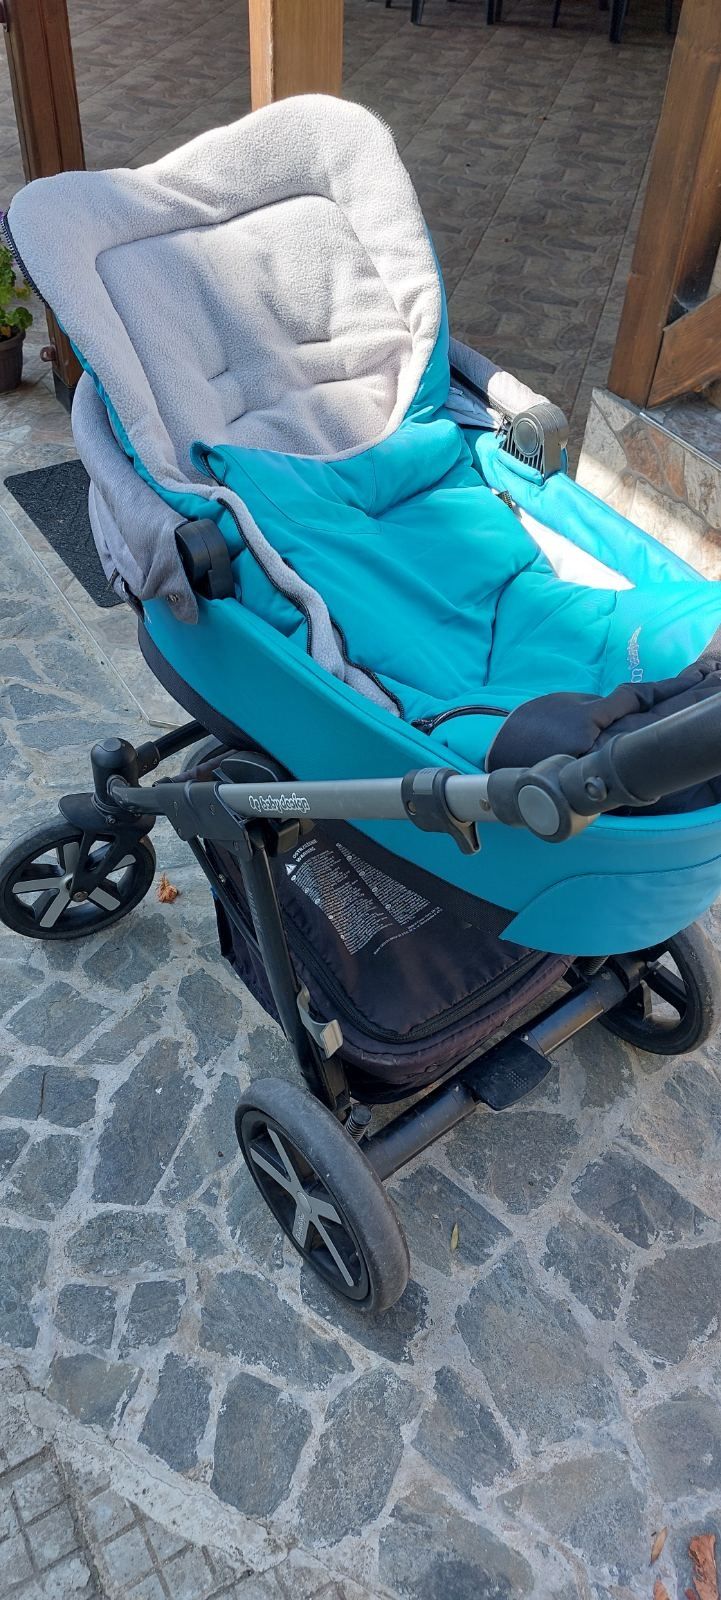 Бебешка количка Baby design Husky 2 в 1